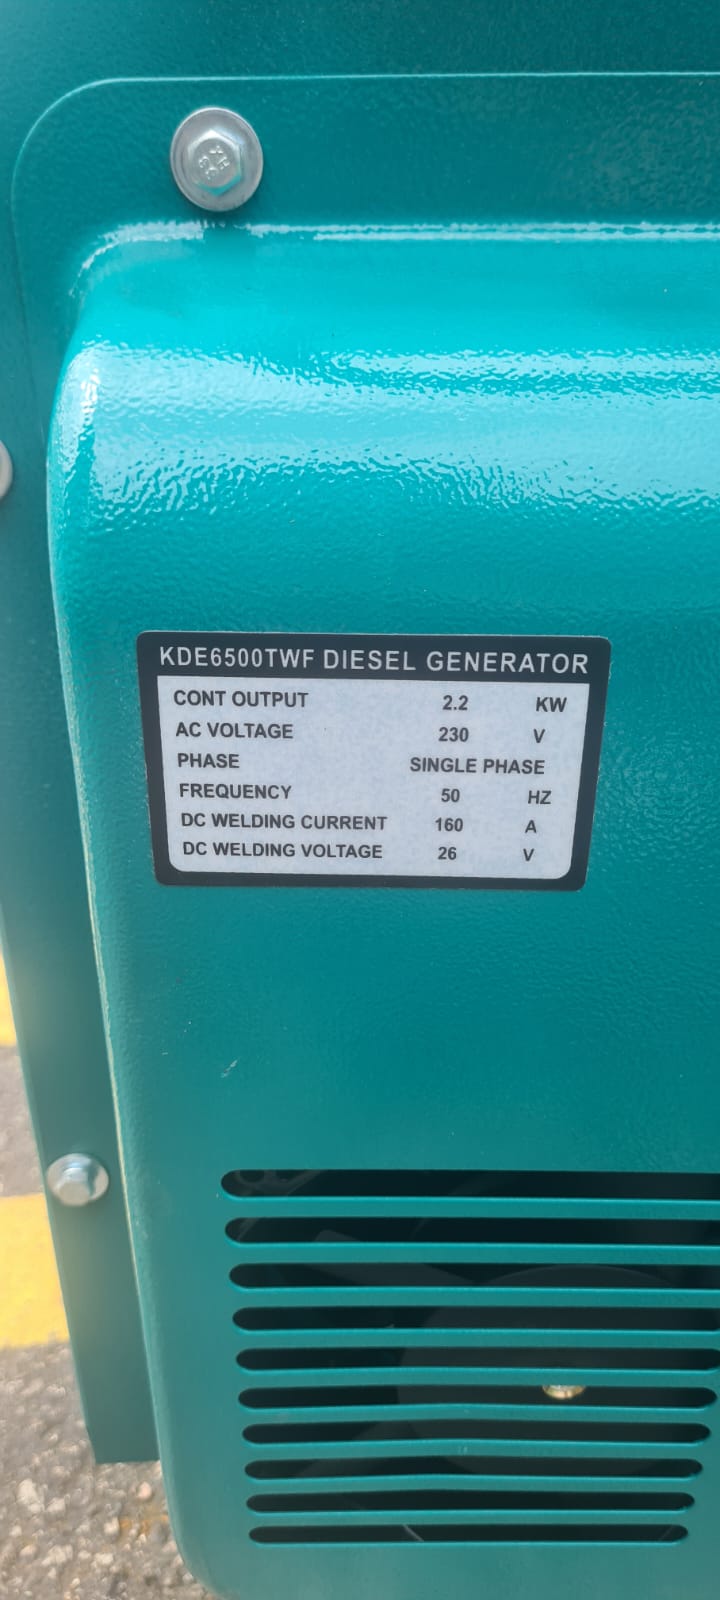 Denko Diesel Welder Cum Generator 2.5Kva 160A Come With Ns40 Battery | Model : KDE6500TW Diesel Generator Denko 